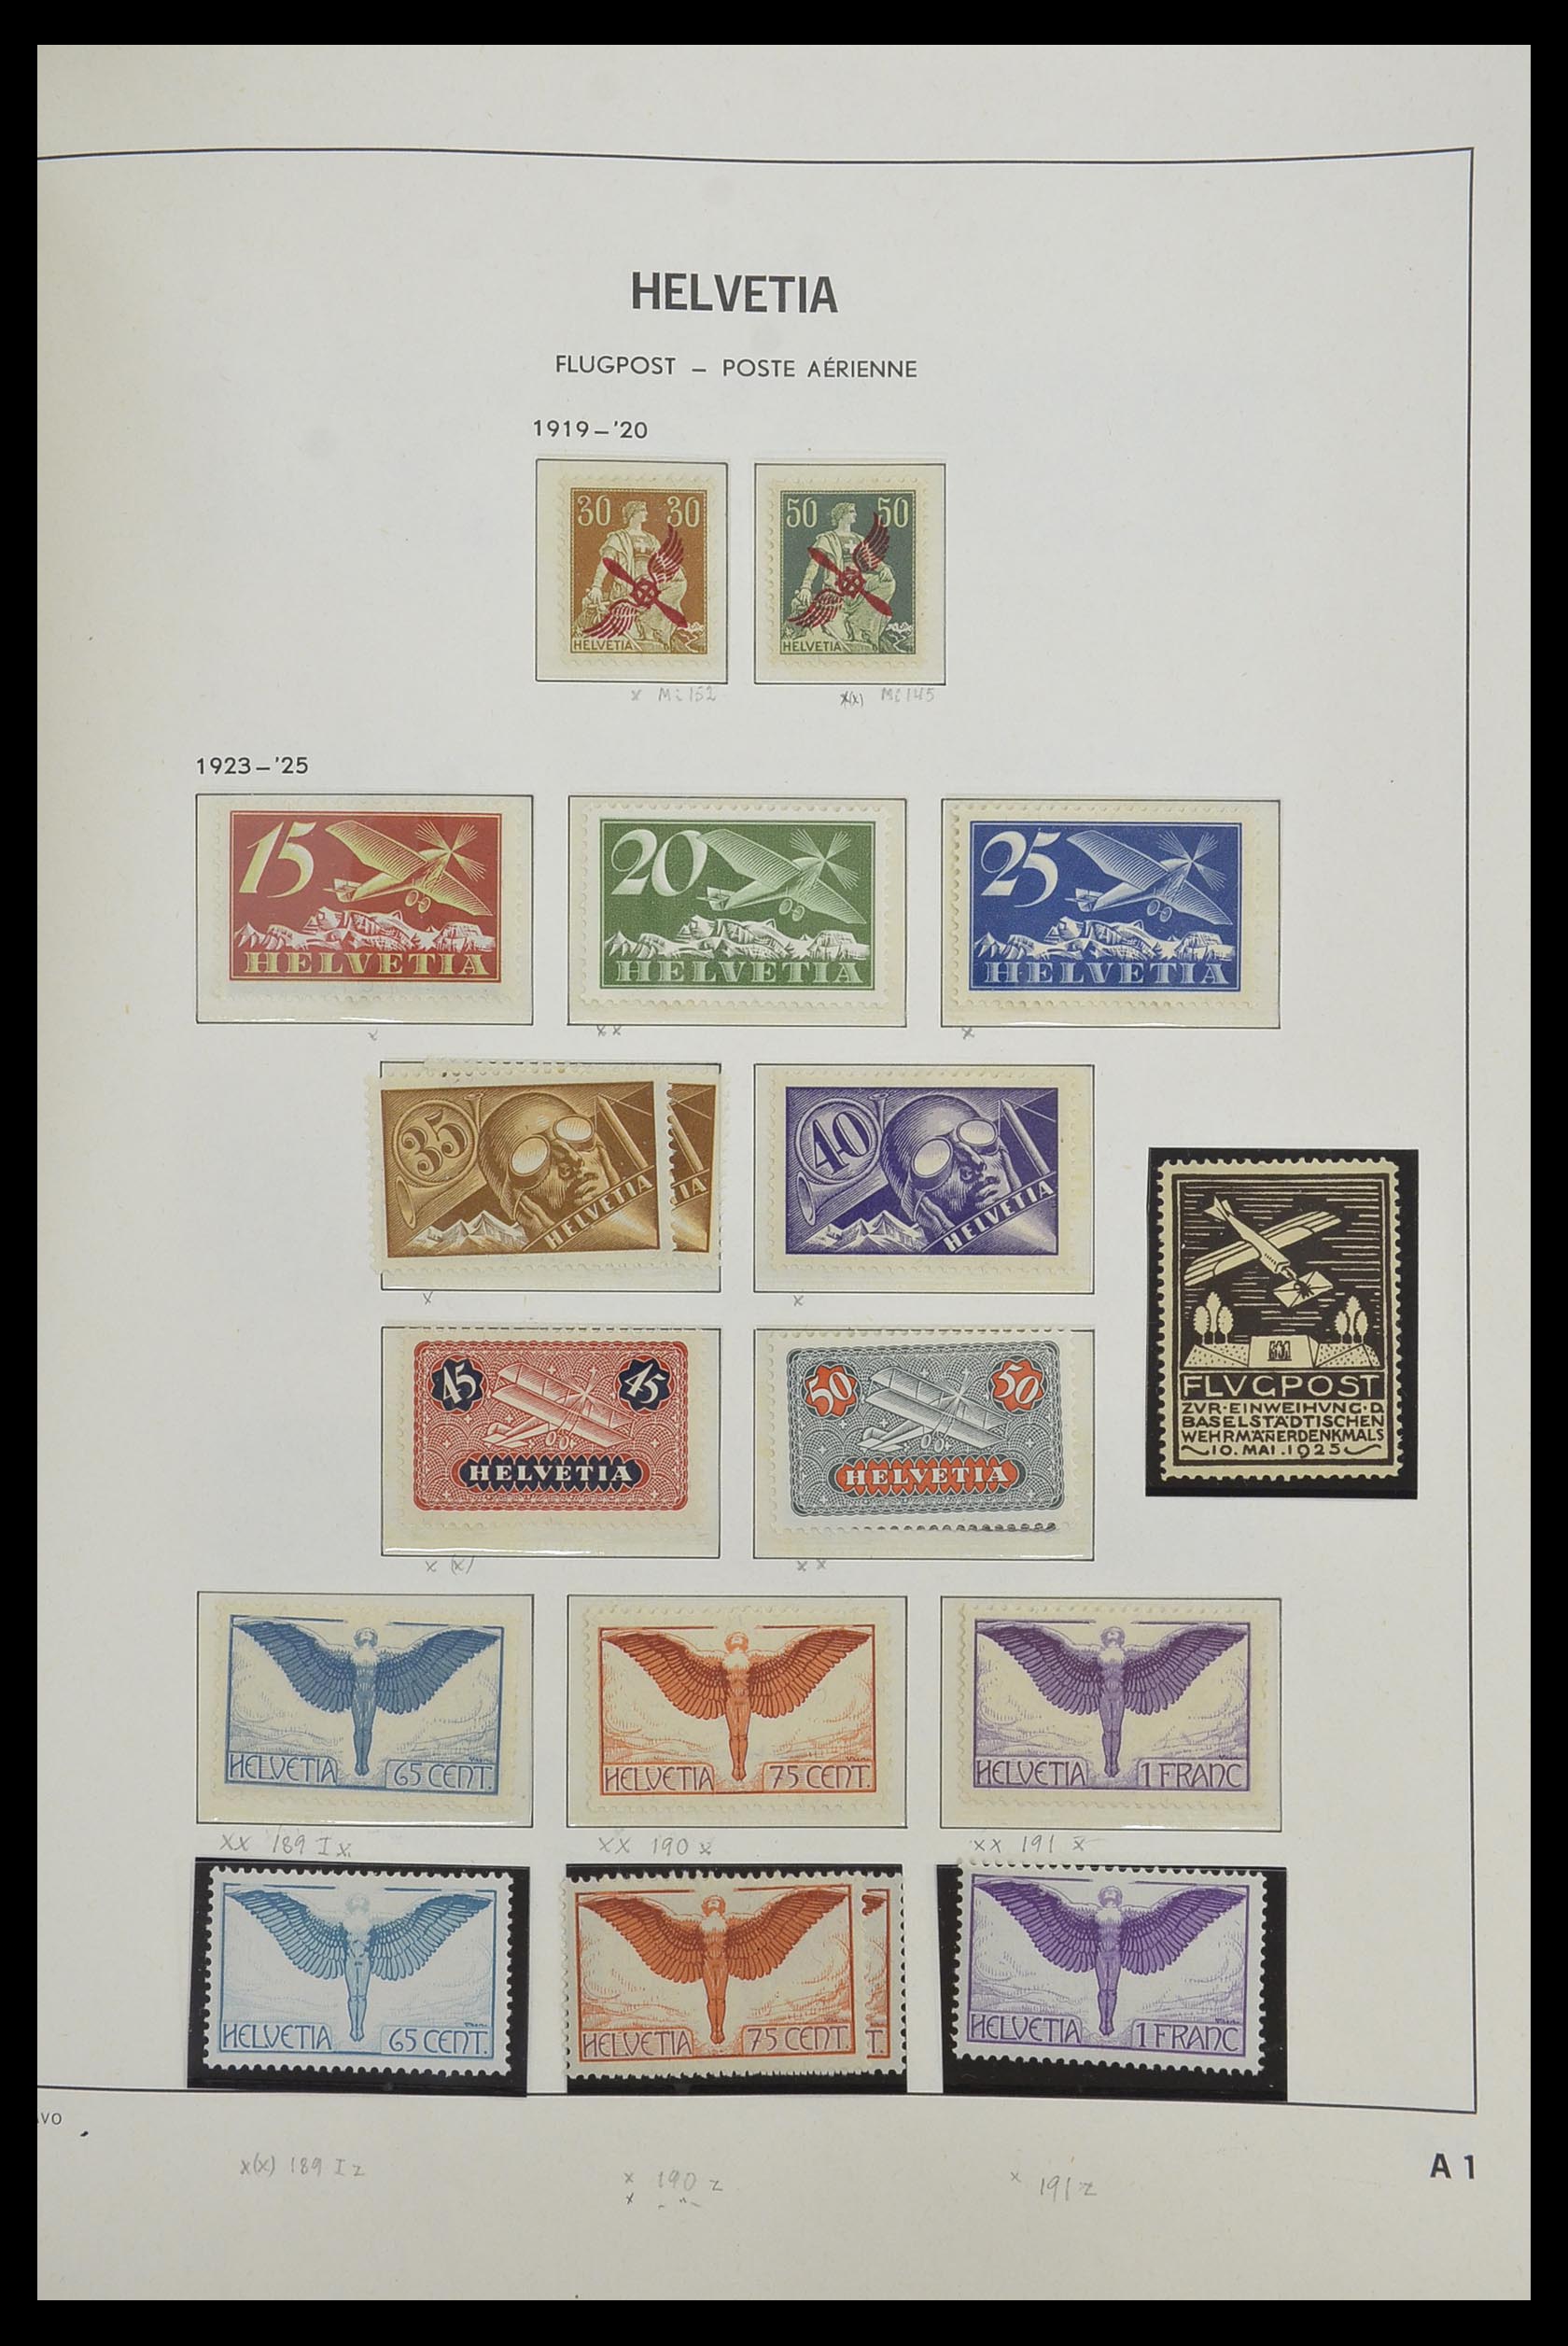 33556 131 - Stamp collection 33556 Switzerland 1862-2000.